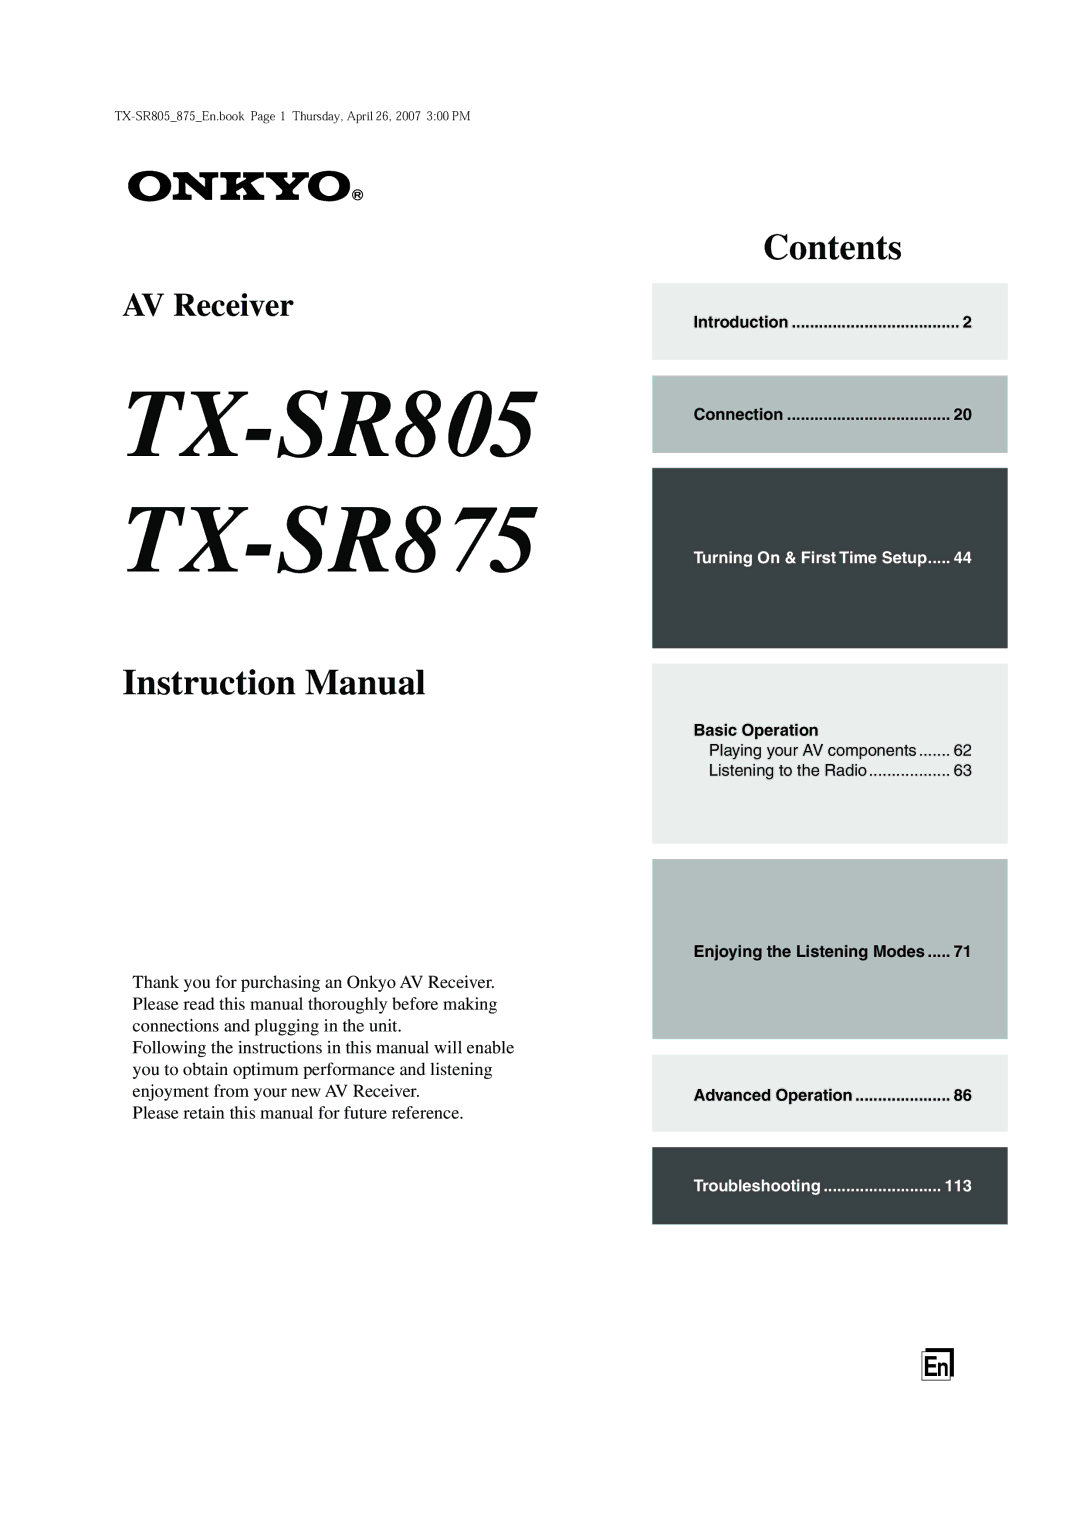 Onkyo instruction manual TX-SR805 TX-SR875 